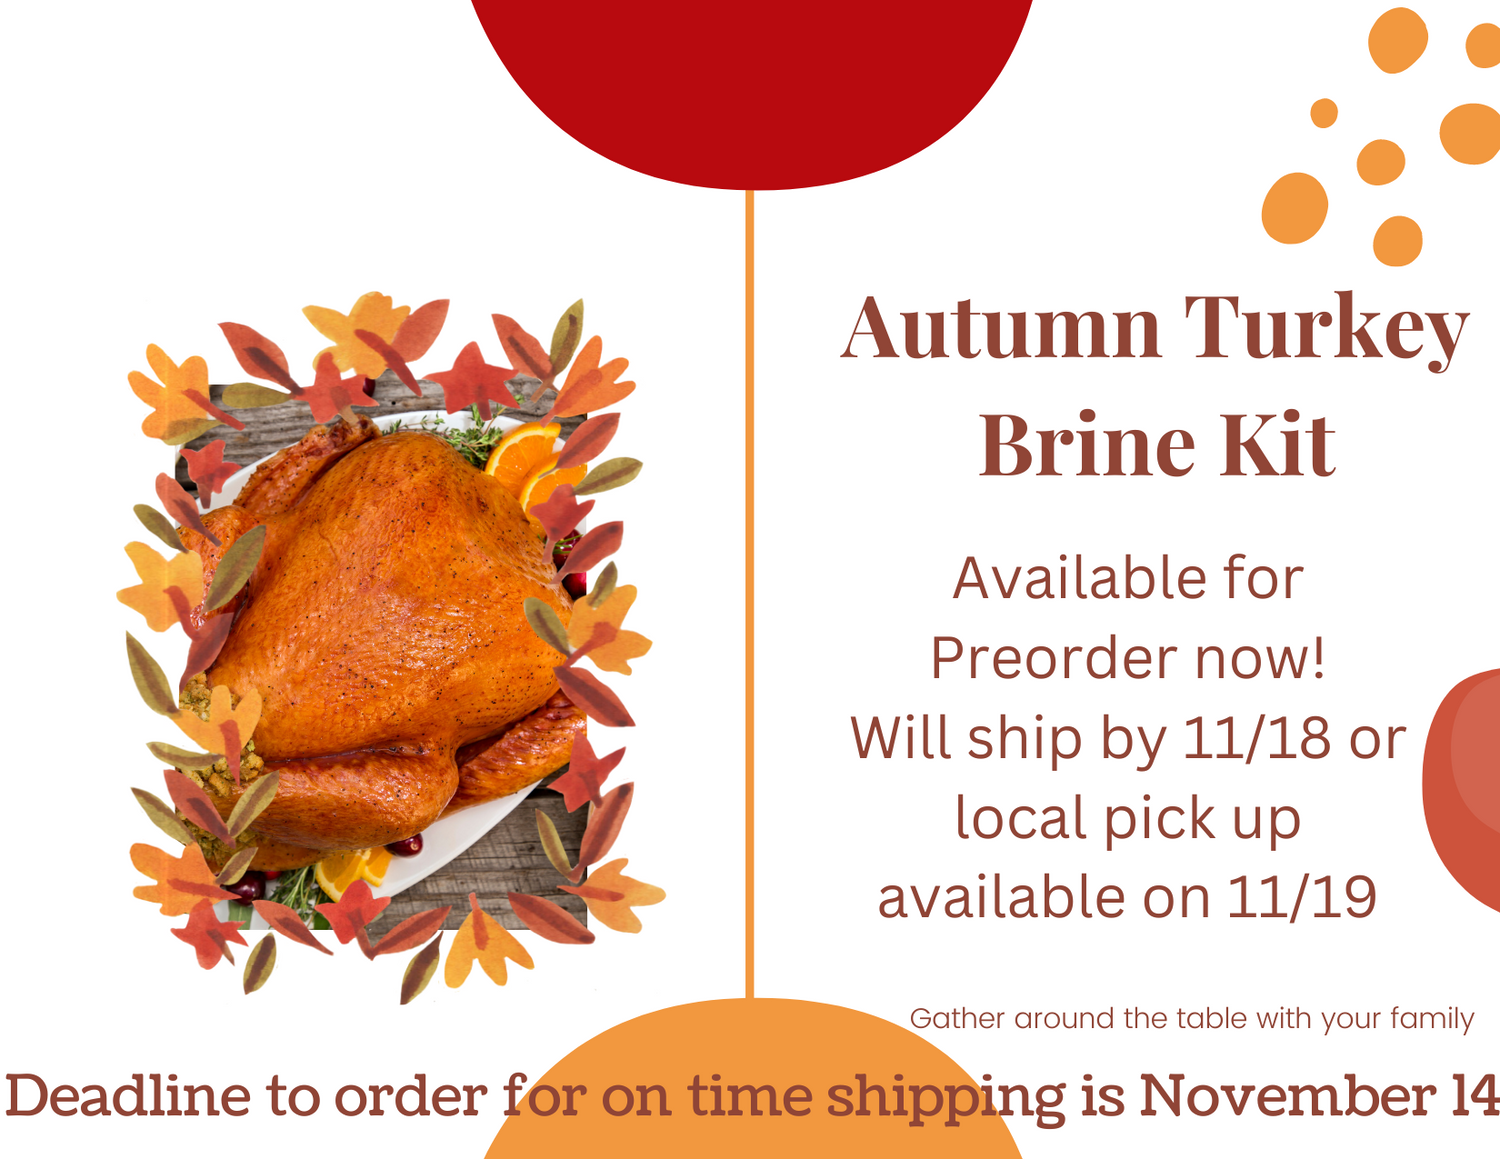 Autumn Turkey Brine Kit! Order Now!